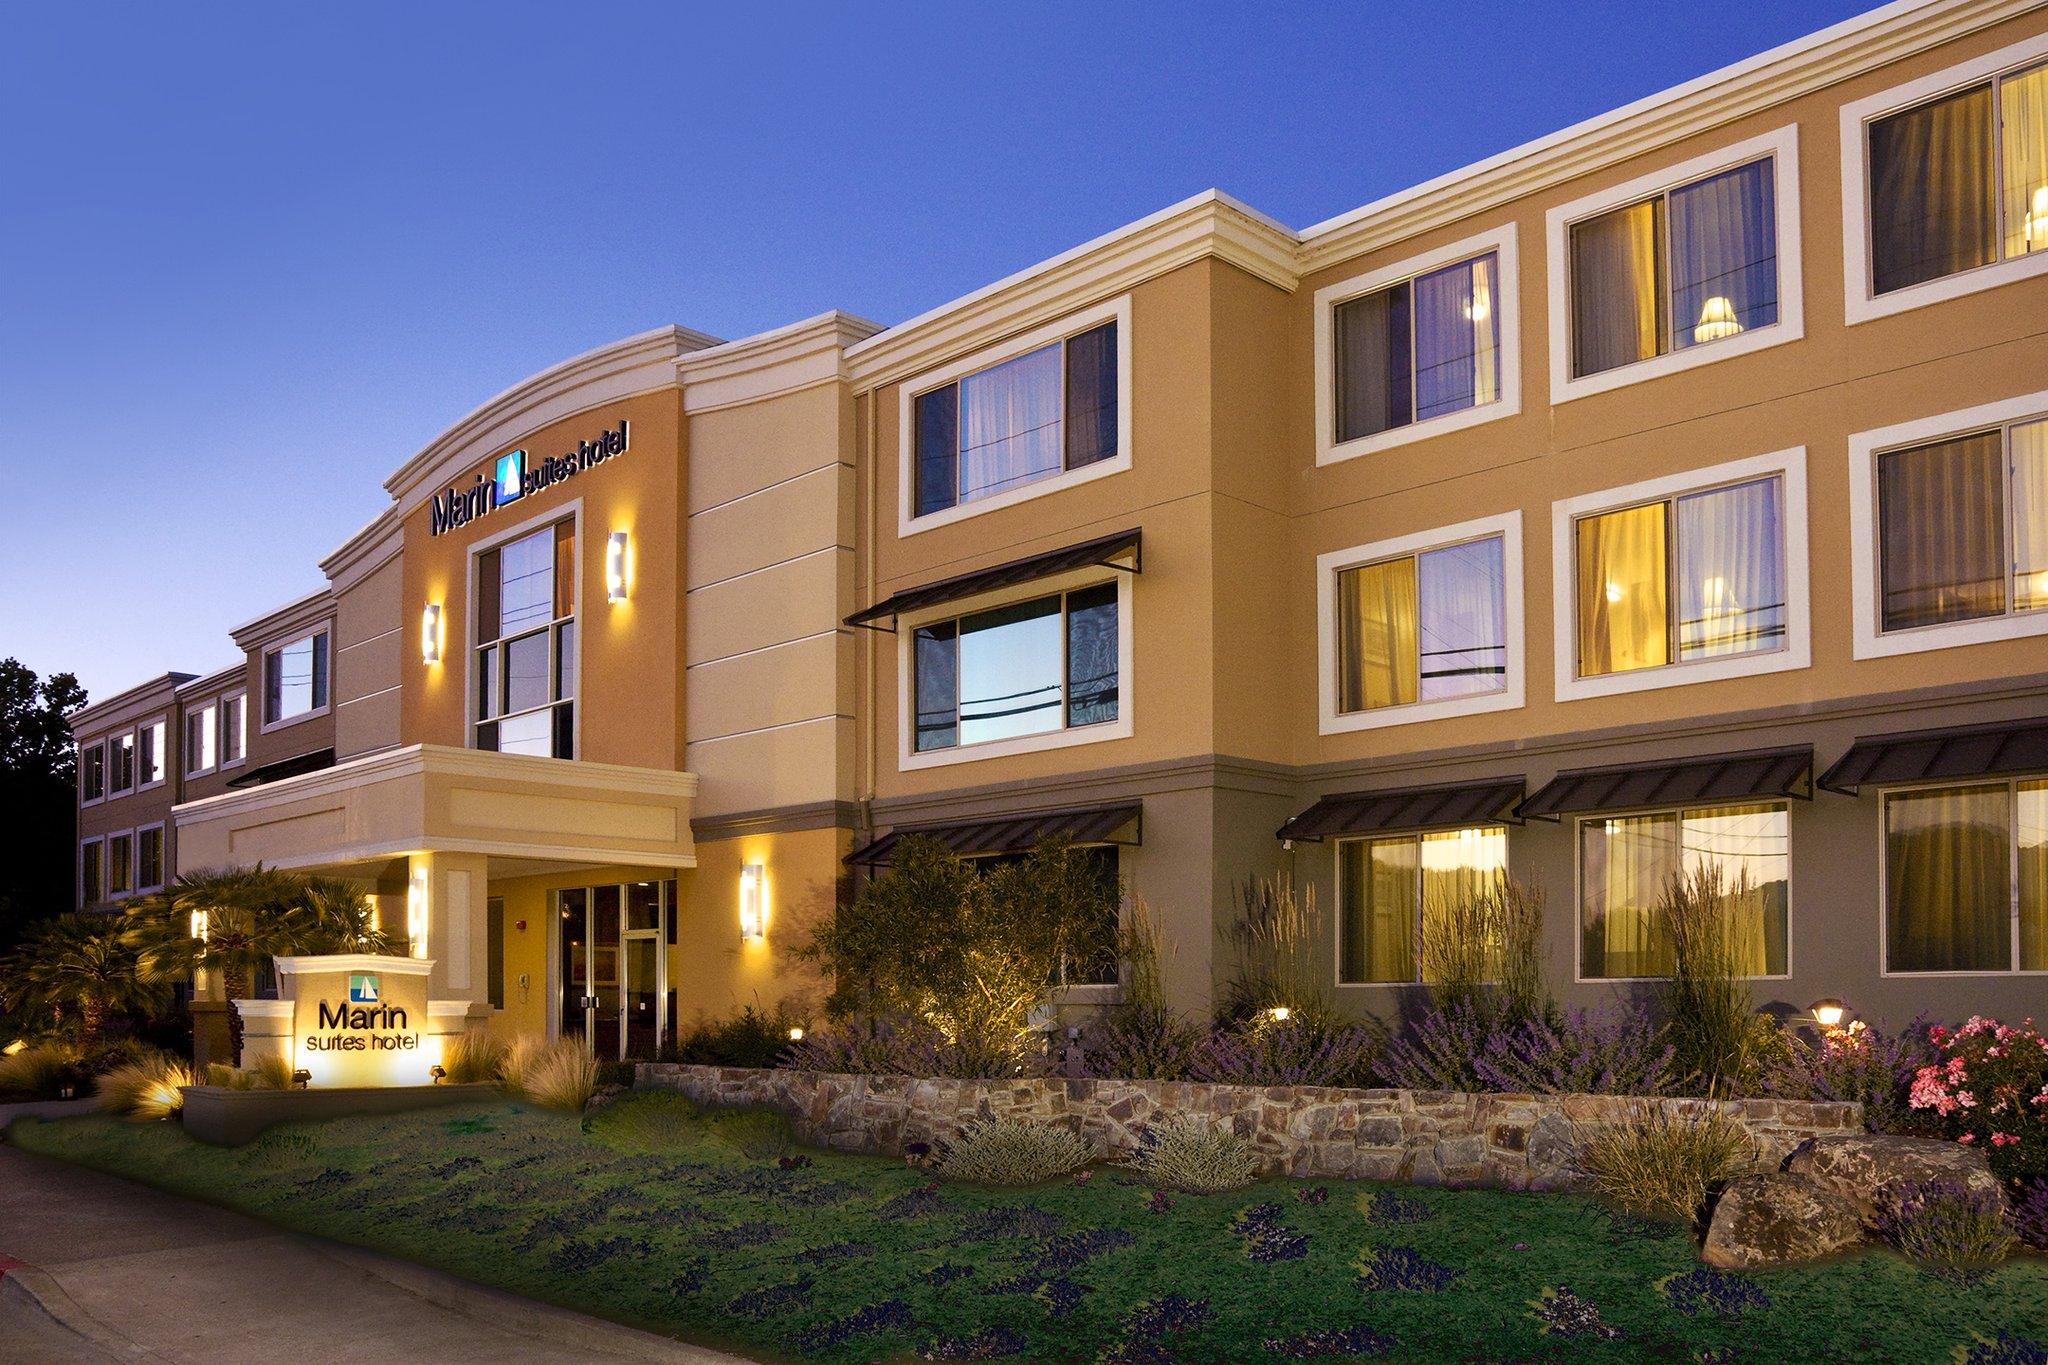 Marin Suites Hotel in Corte Madera, CA